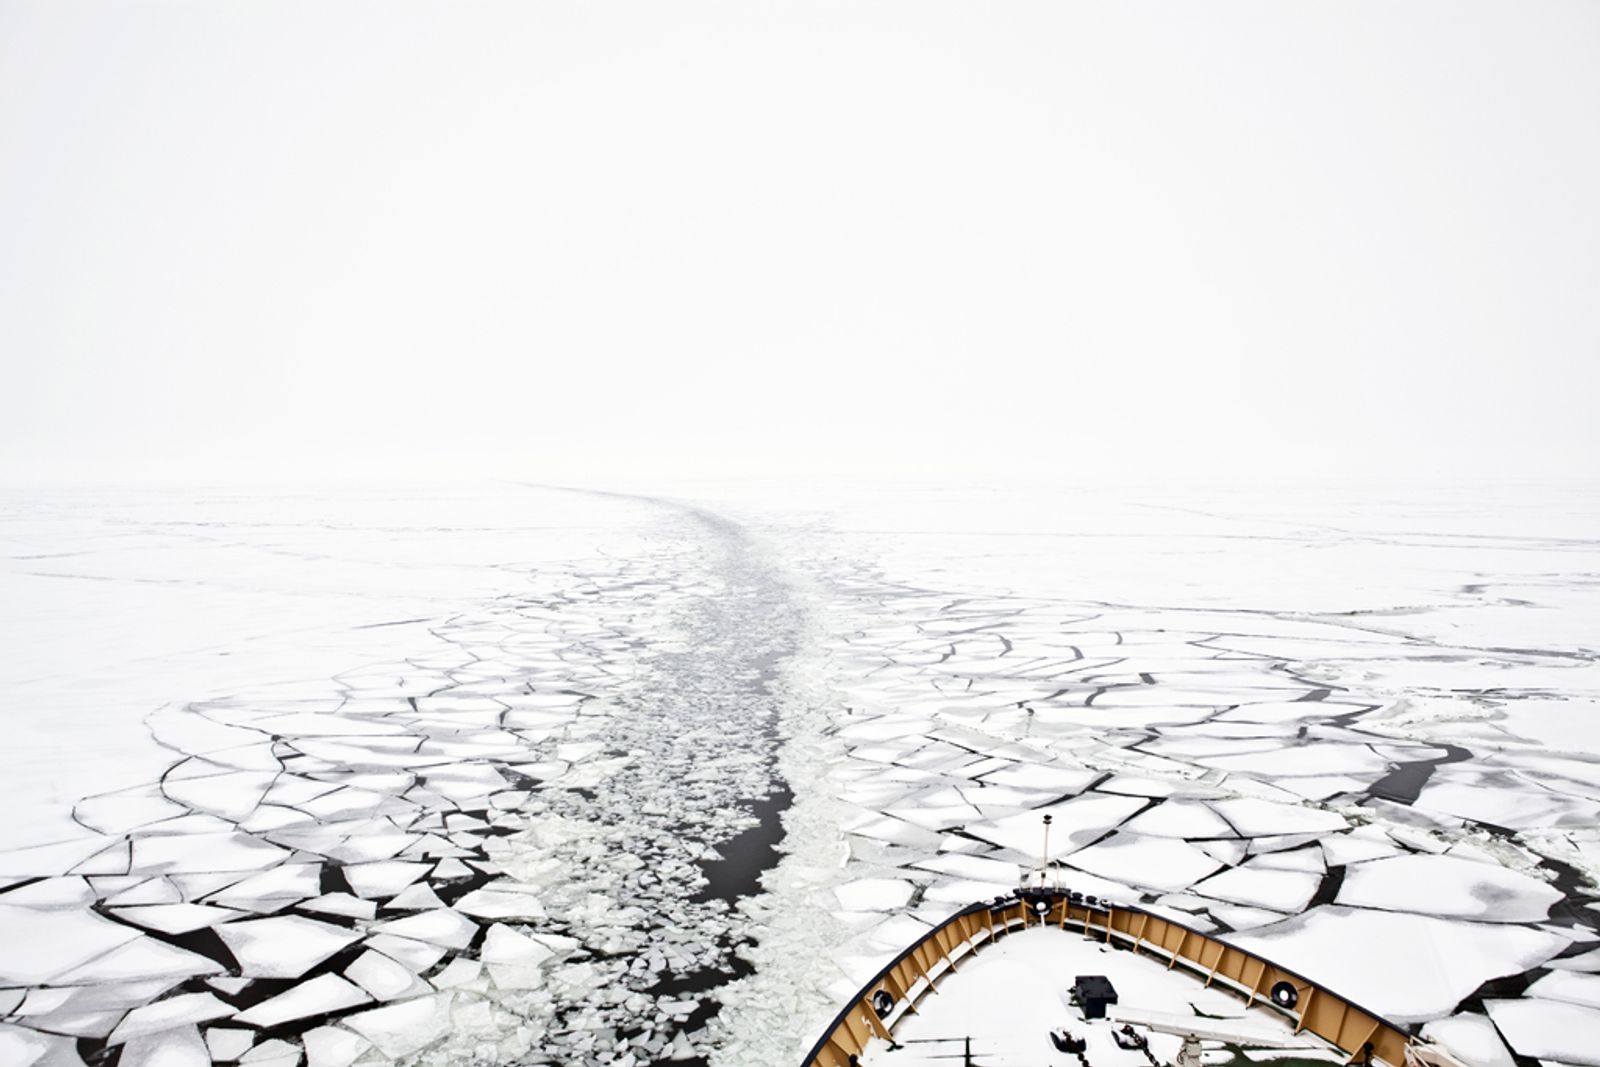 © Maria Vittoria Trovato - Image from the icebreaker frej photography project